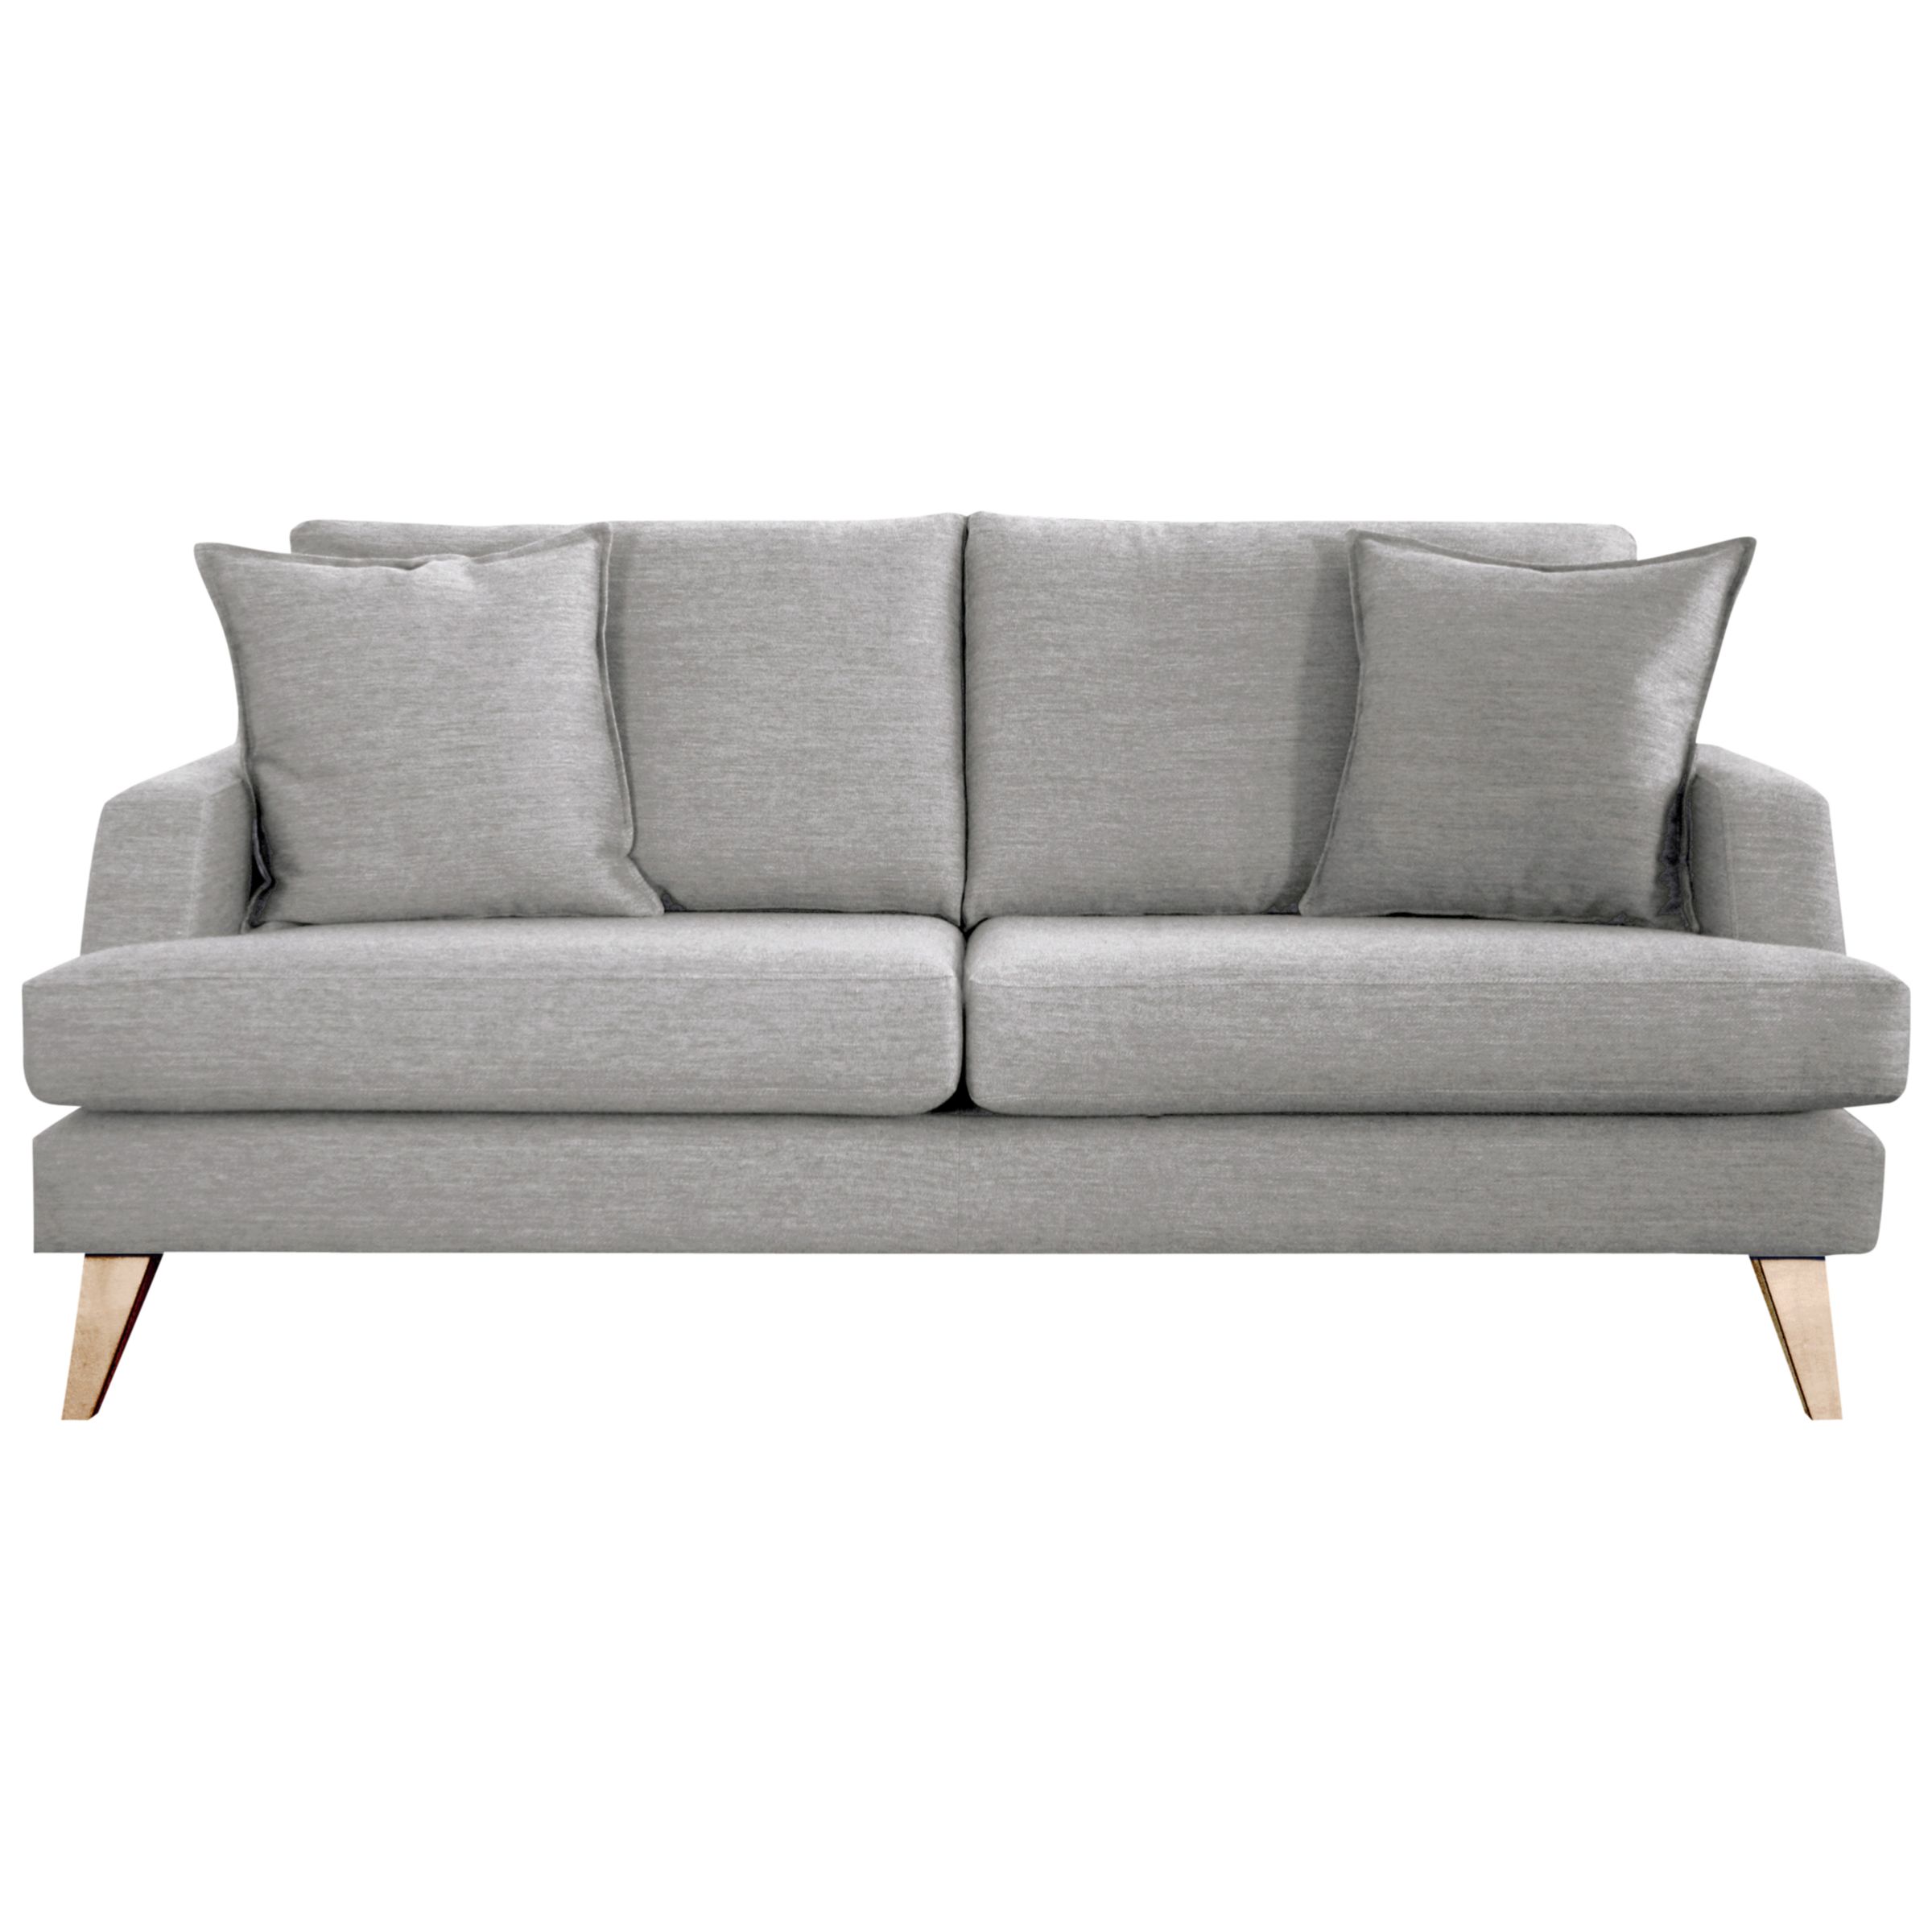 John Lewis Buzz Medium Sofa, Felt Silver, width 177cm